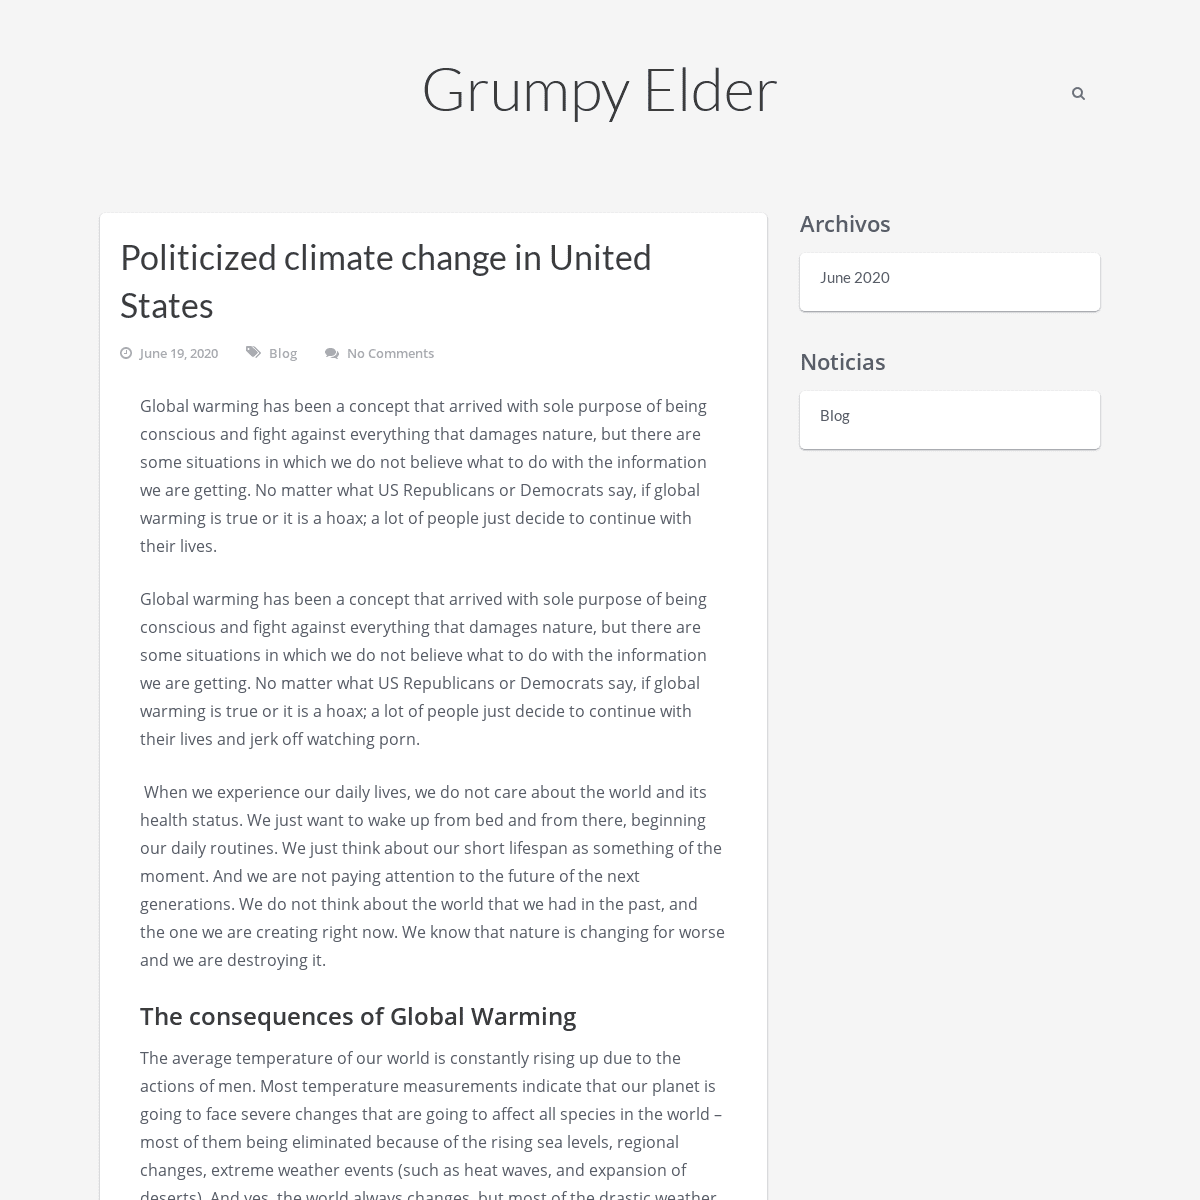 A complete backup of https://grumpyelder.com